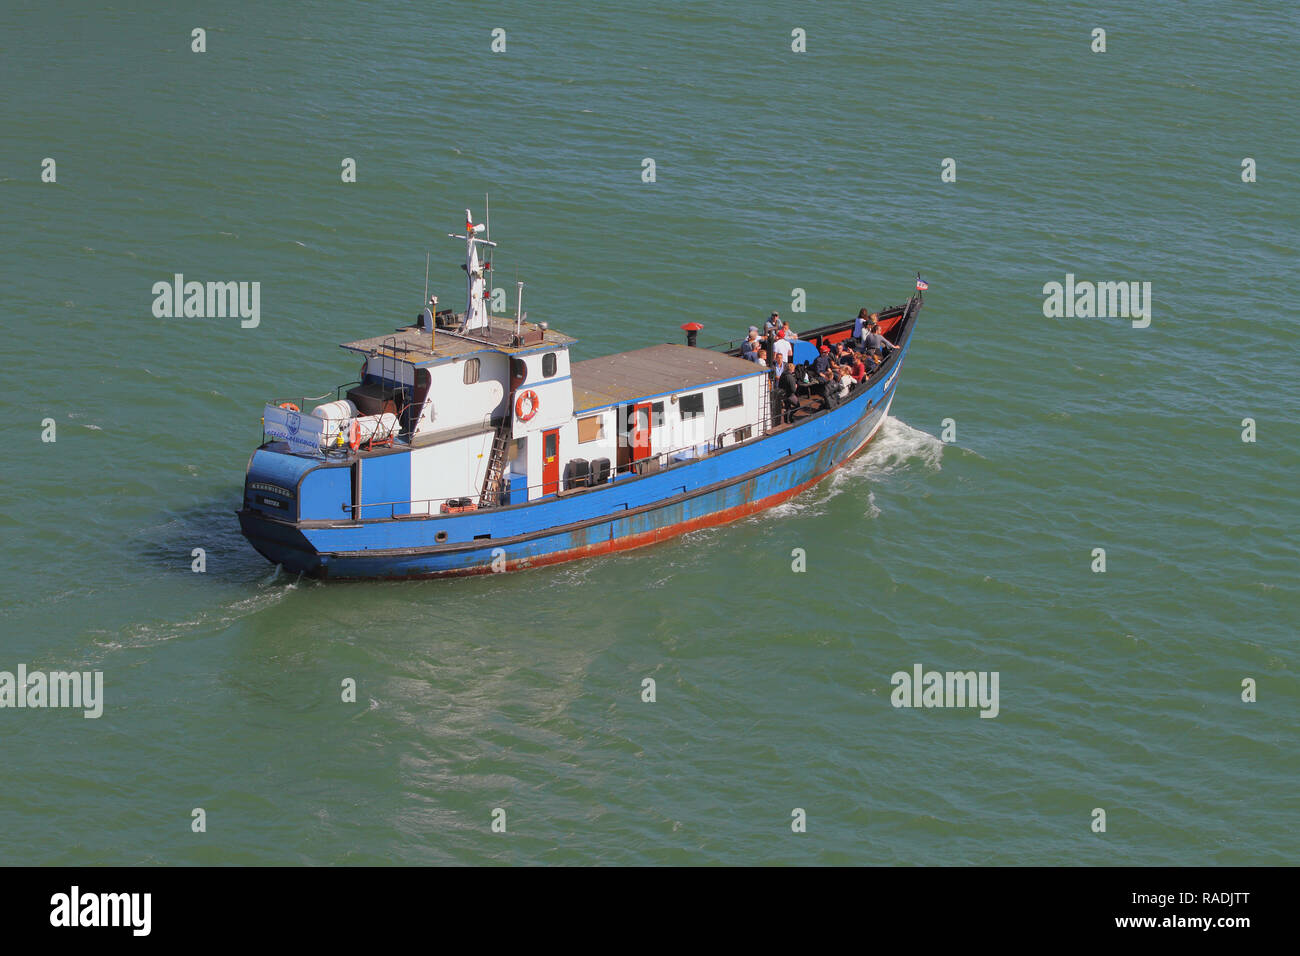 Warnemunde, Rostock, Germany - Jul 06, 2018: Small motorized vessel Stock Photo